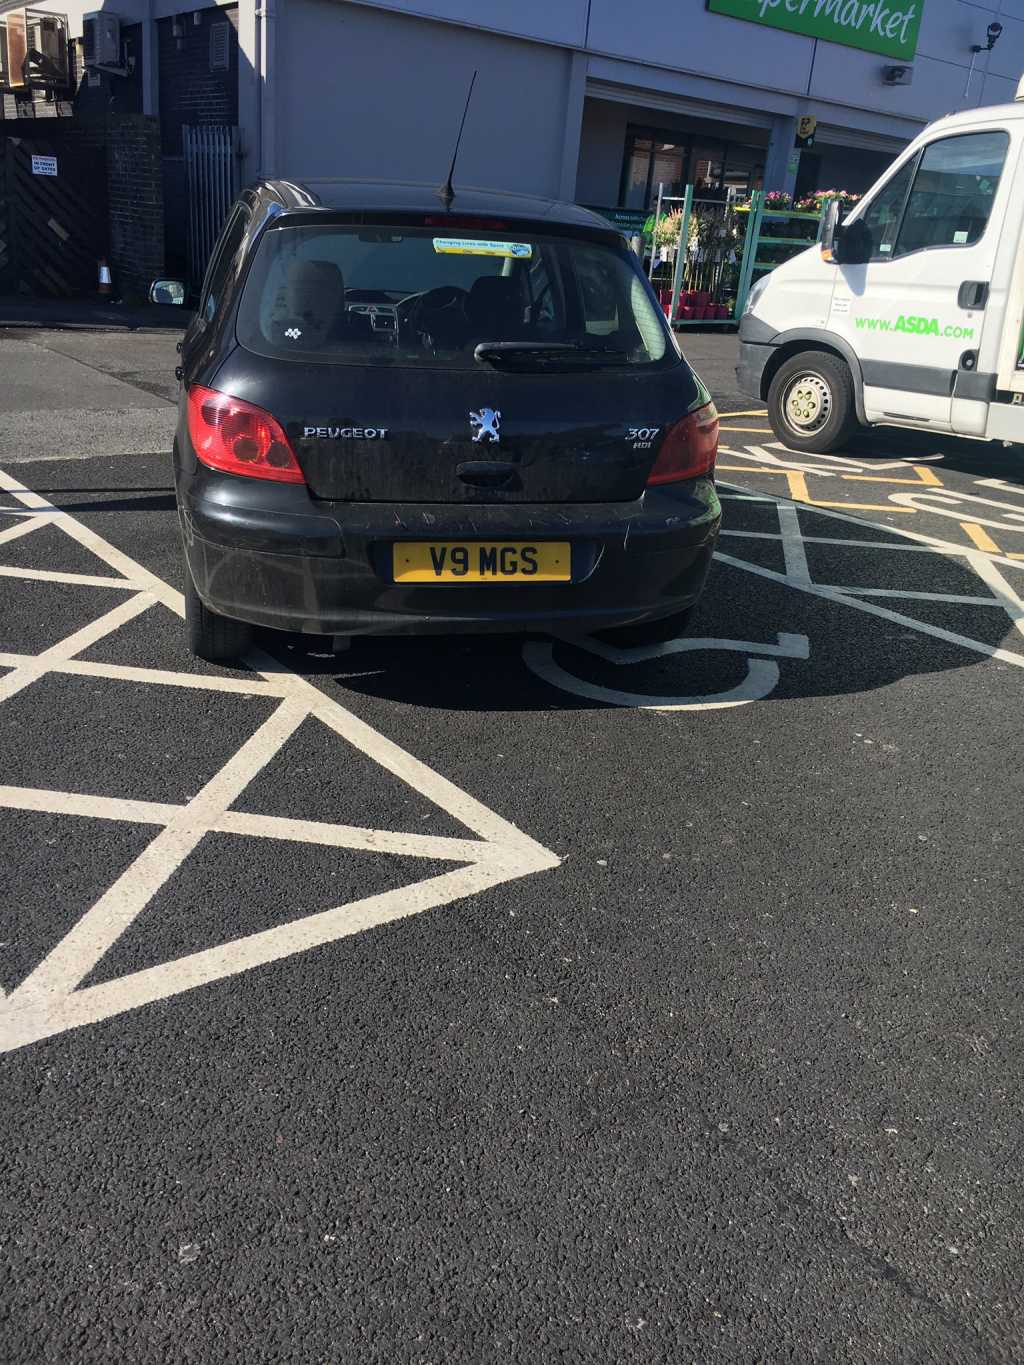 V9 MGS displaying Selfish Parking